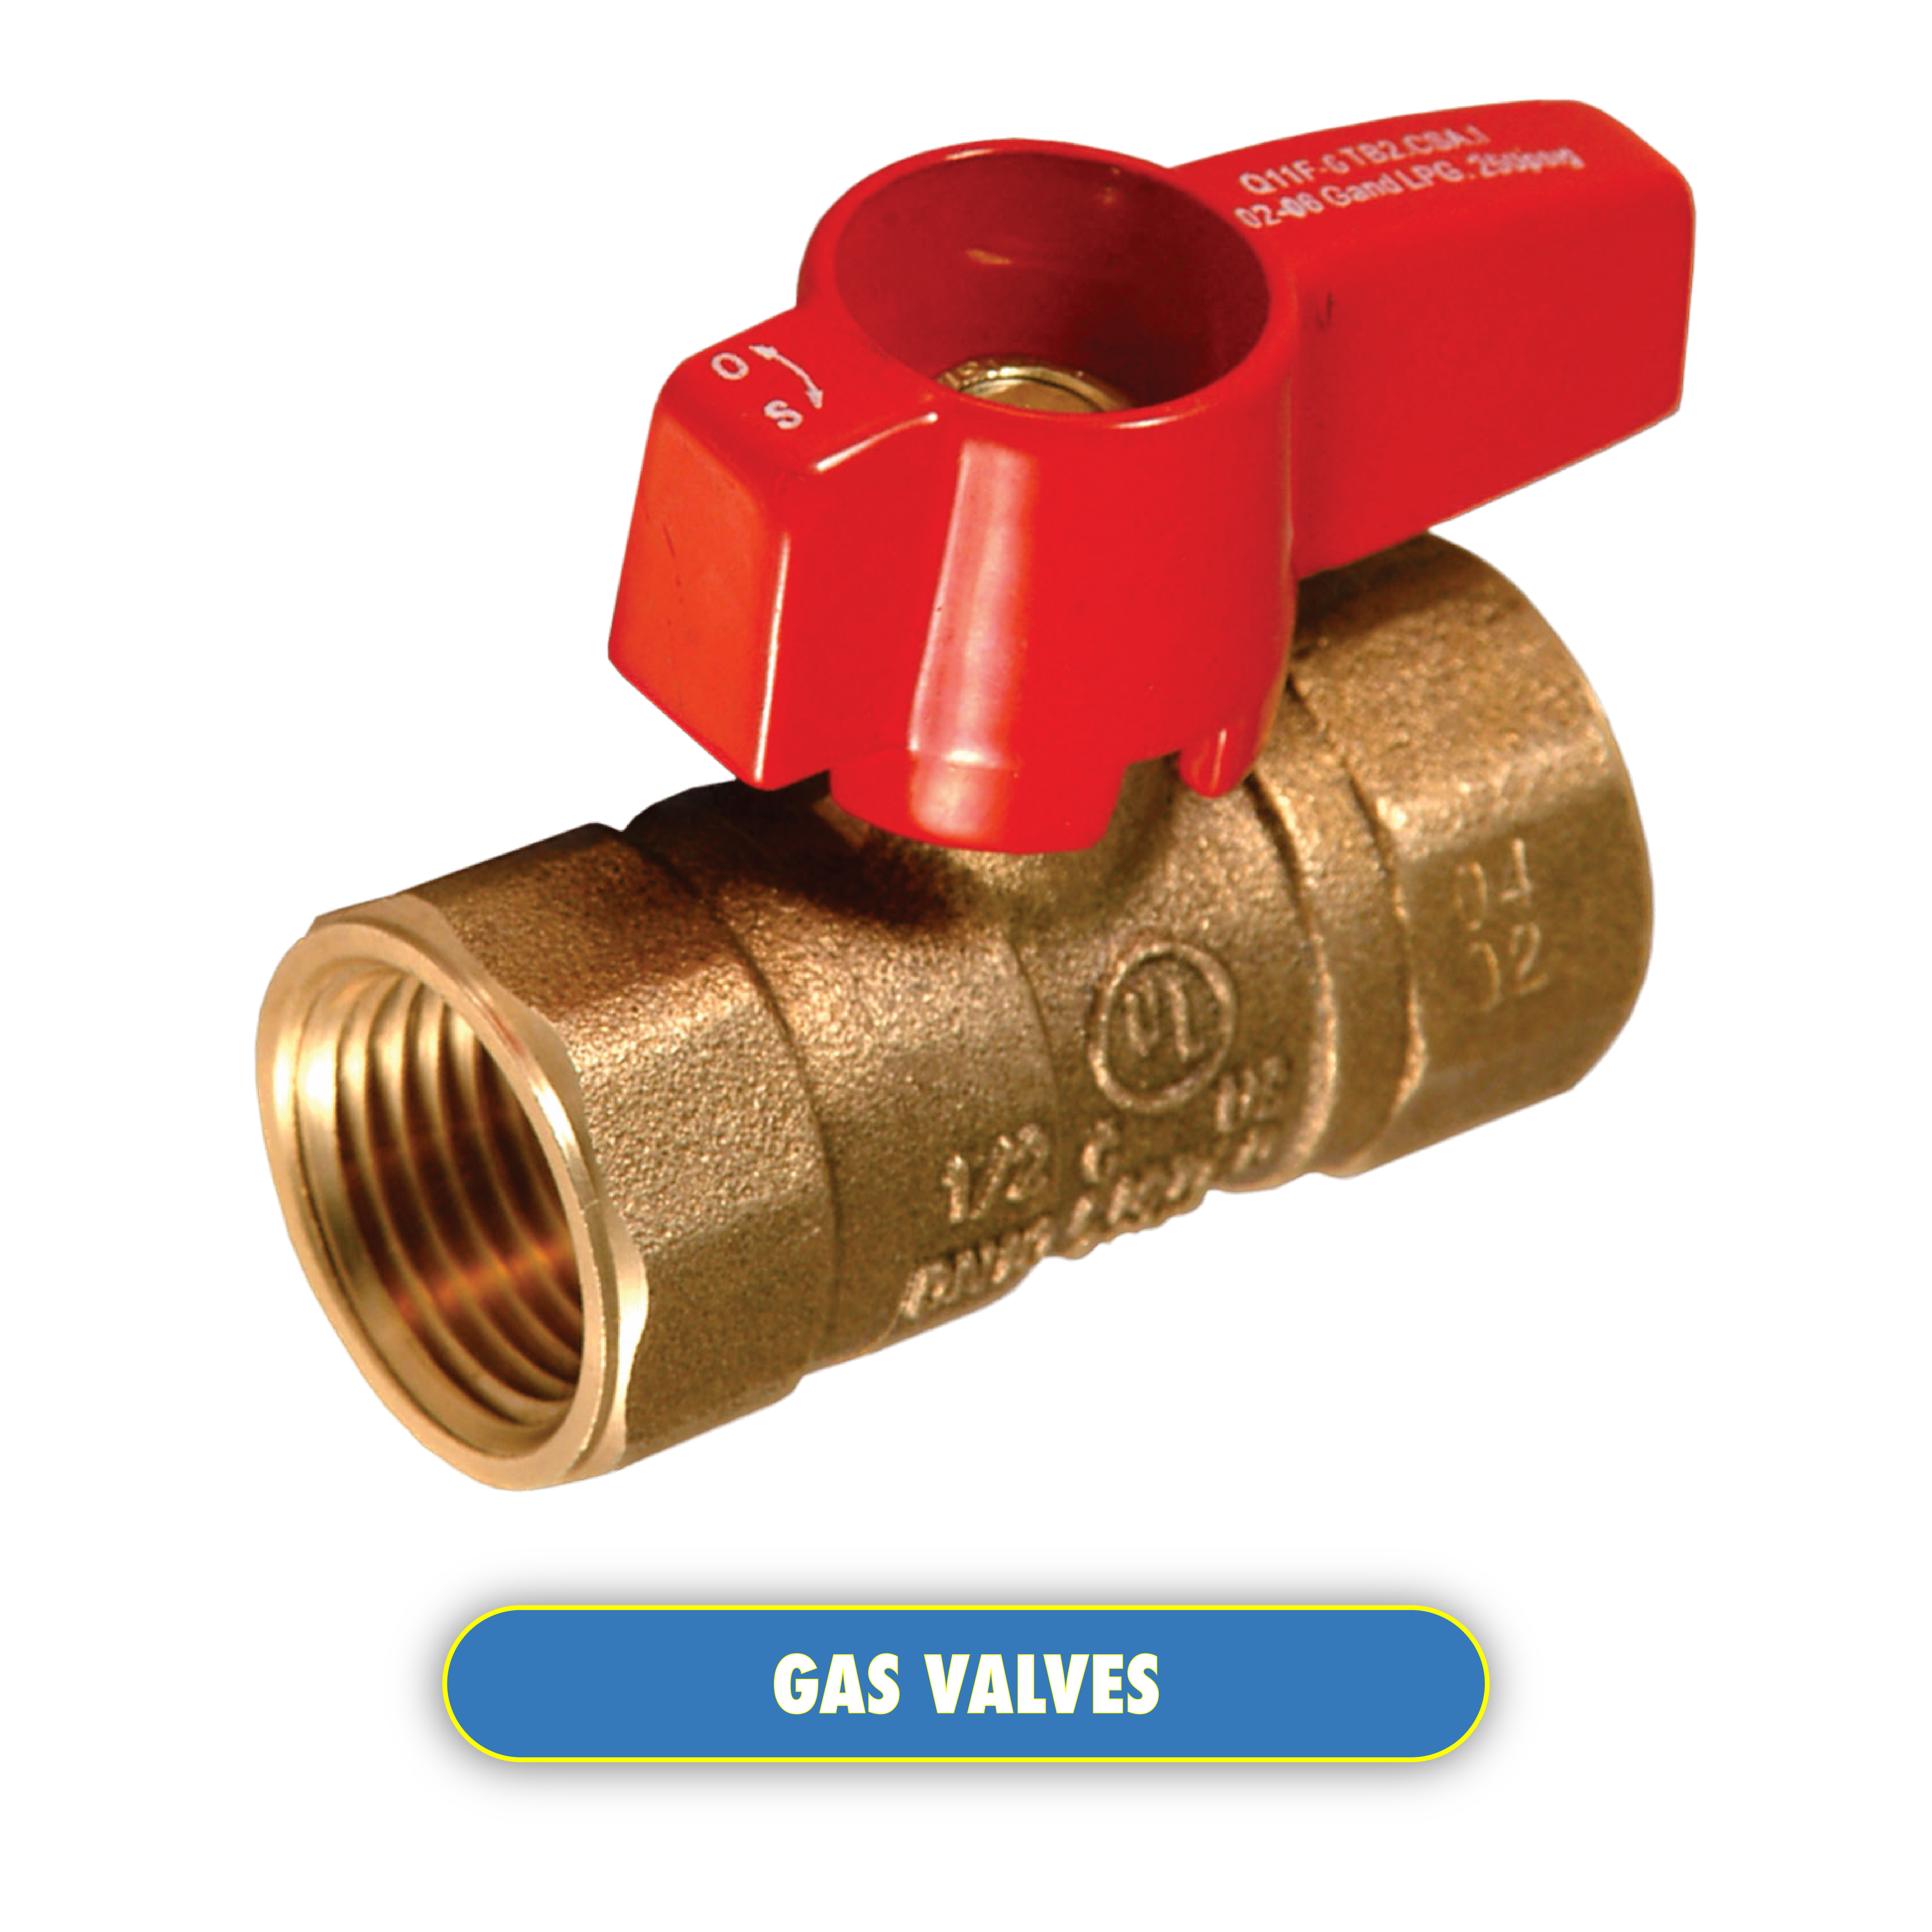 Gas valves